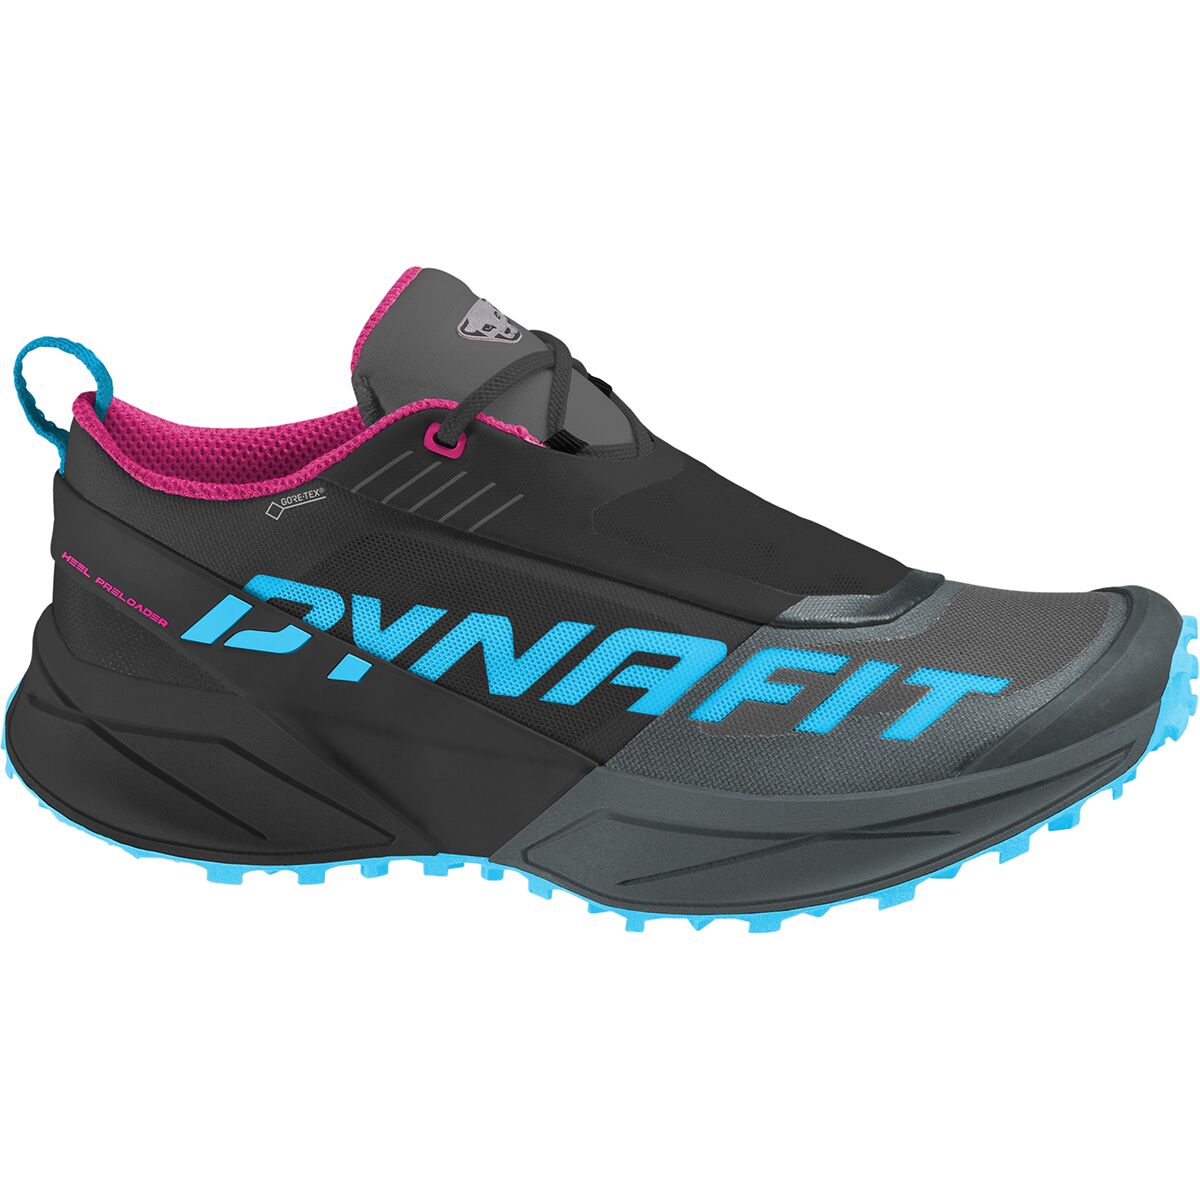 Dynafit Ultra 100 GTX Trail Running Shoe - Women's